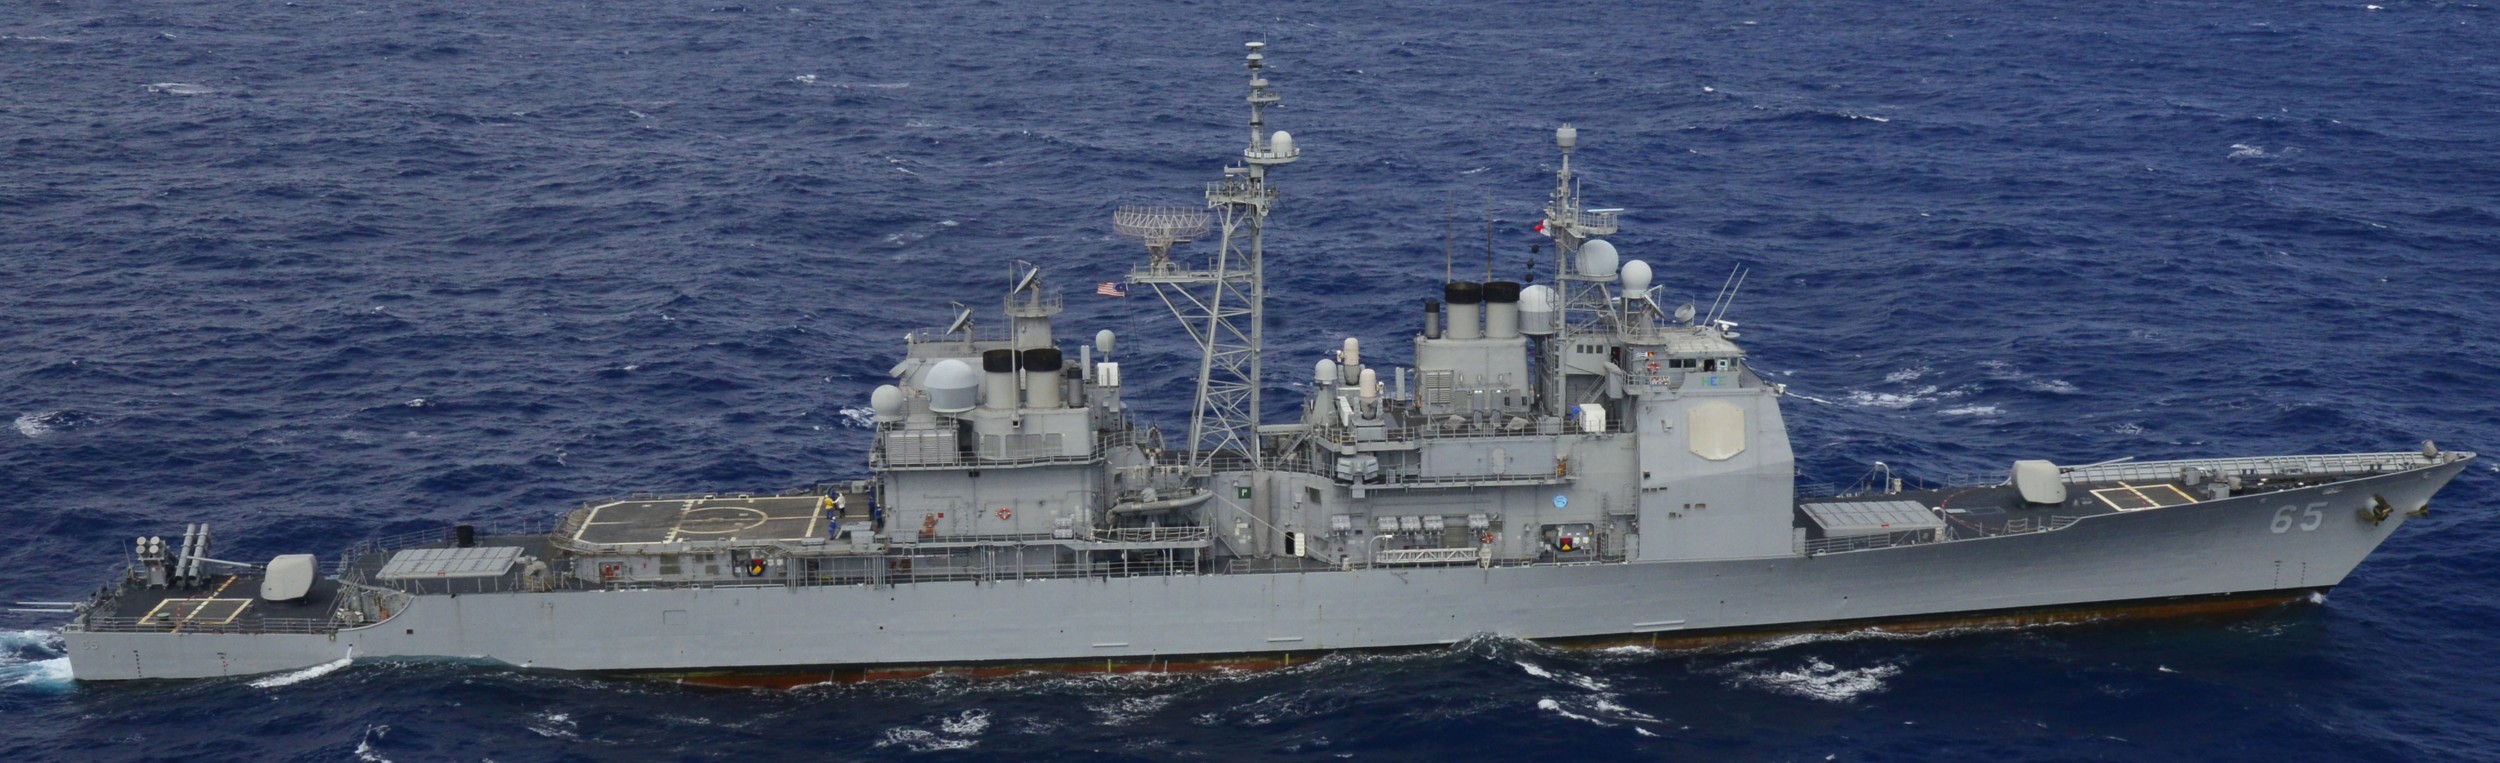 cg-65 uss chosin ticonderoga class guided missile cruiser aegis us navy exercise koa kai 14-1 51